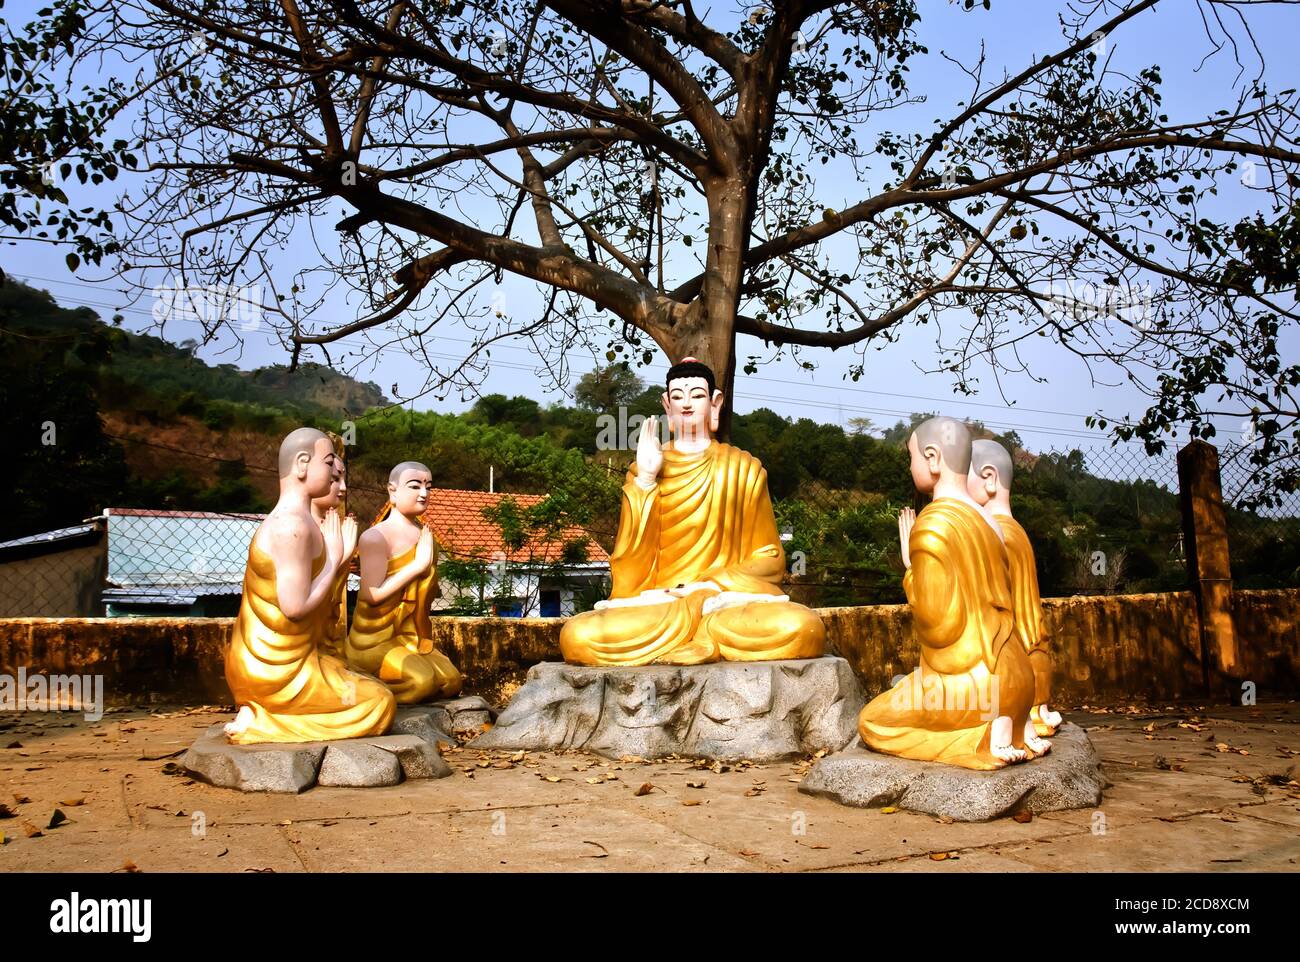 Ancient pagoda architecture, Buddhism, Cham ethnic, Vietnam Stock Photo